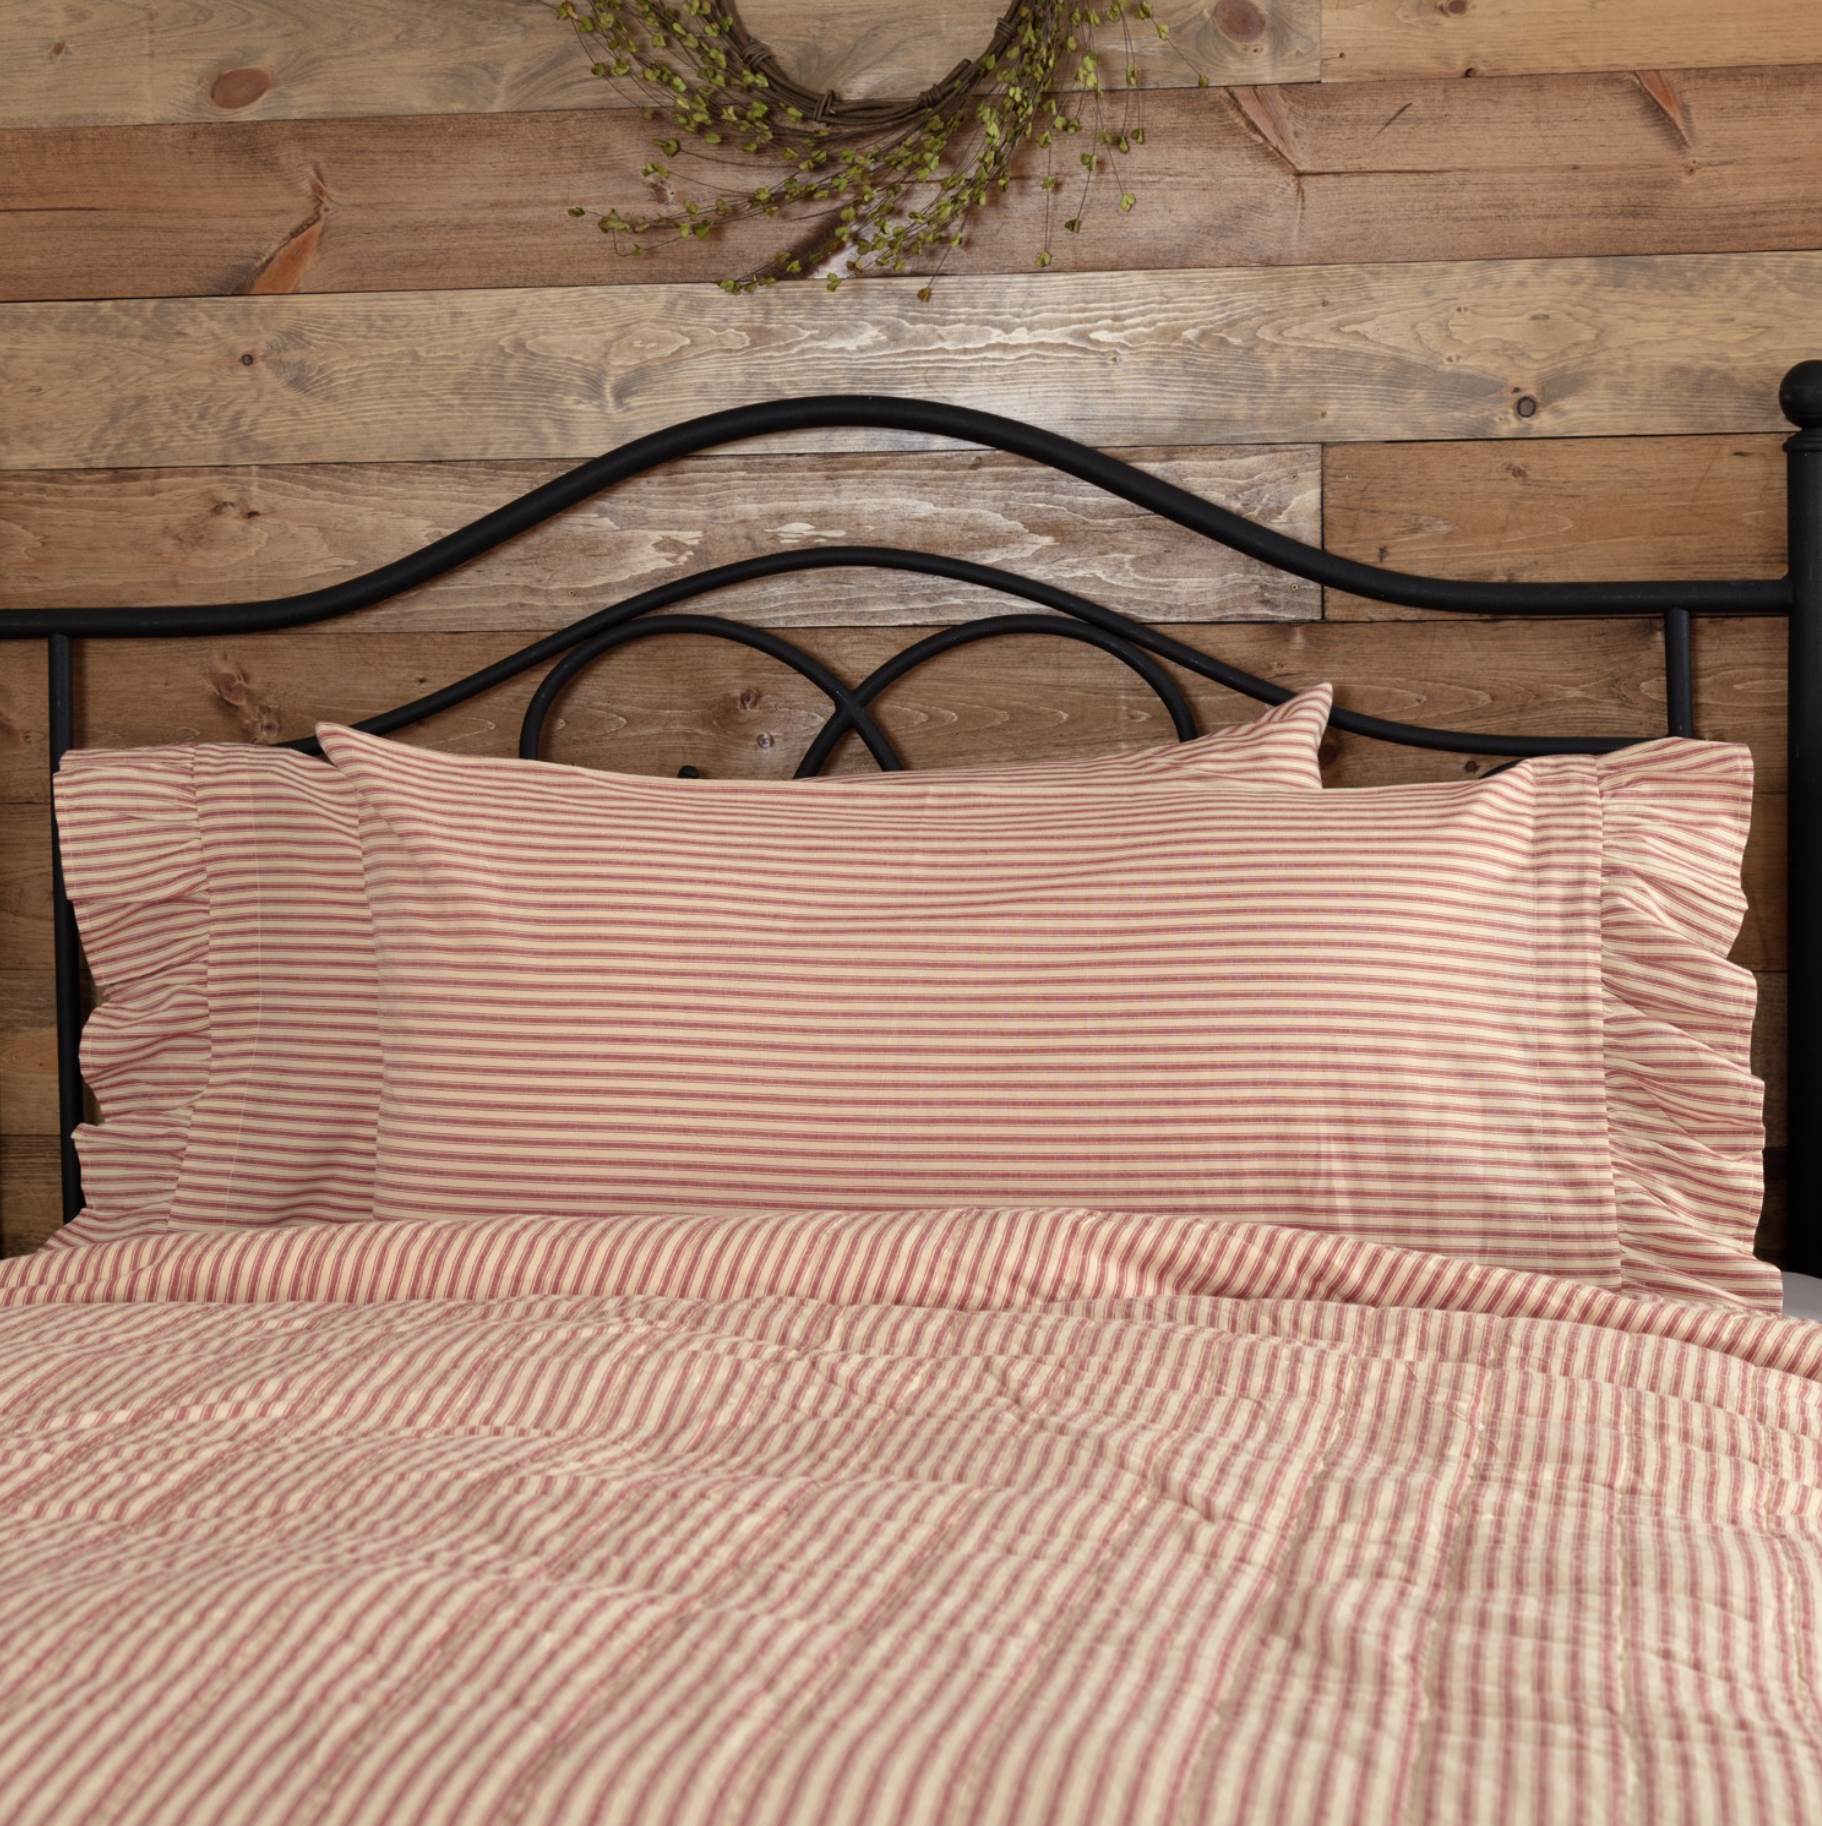 VHC Brands Sawyer Mill Red Ticking Stripe Pillow Case Set of 2